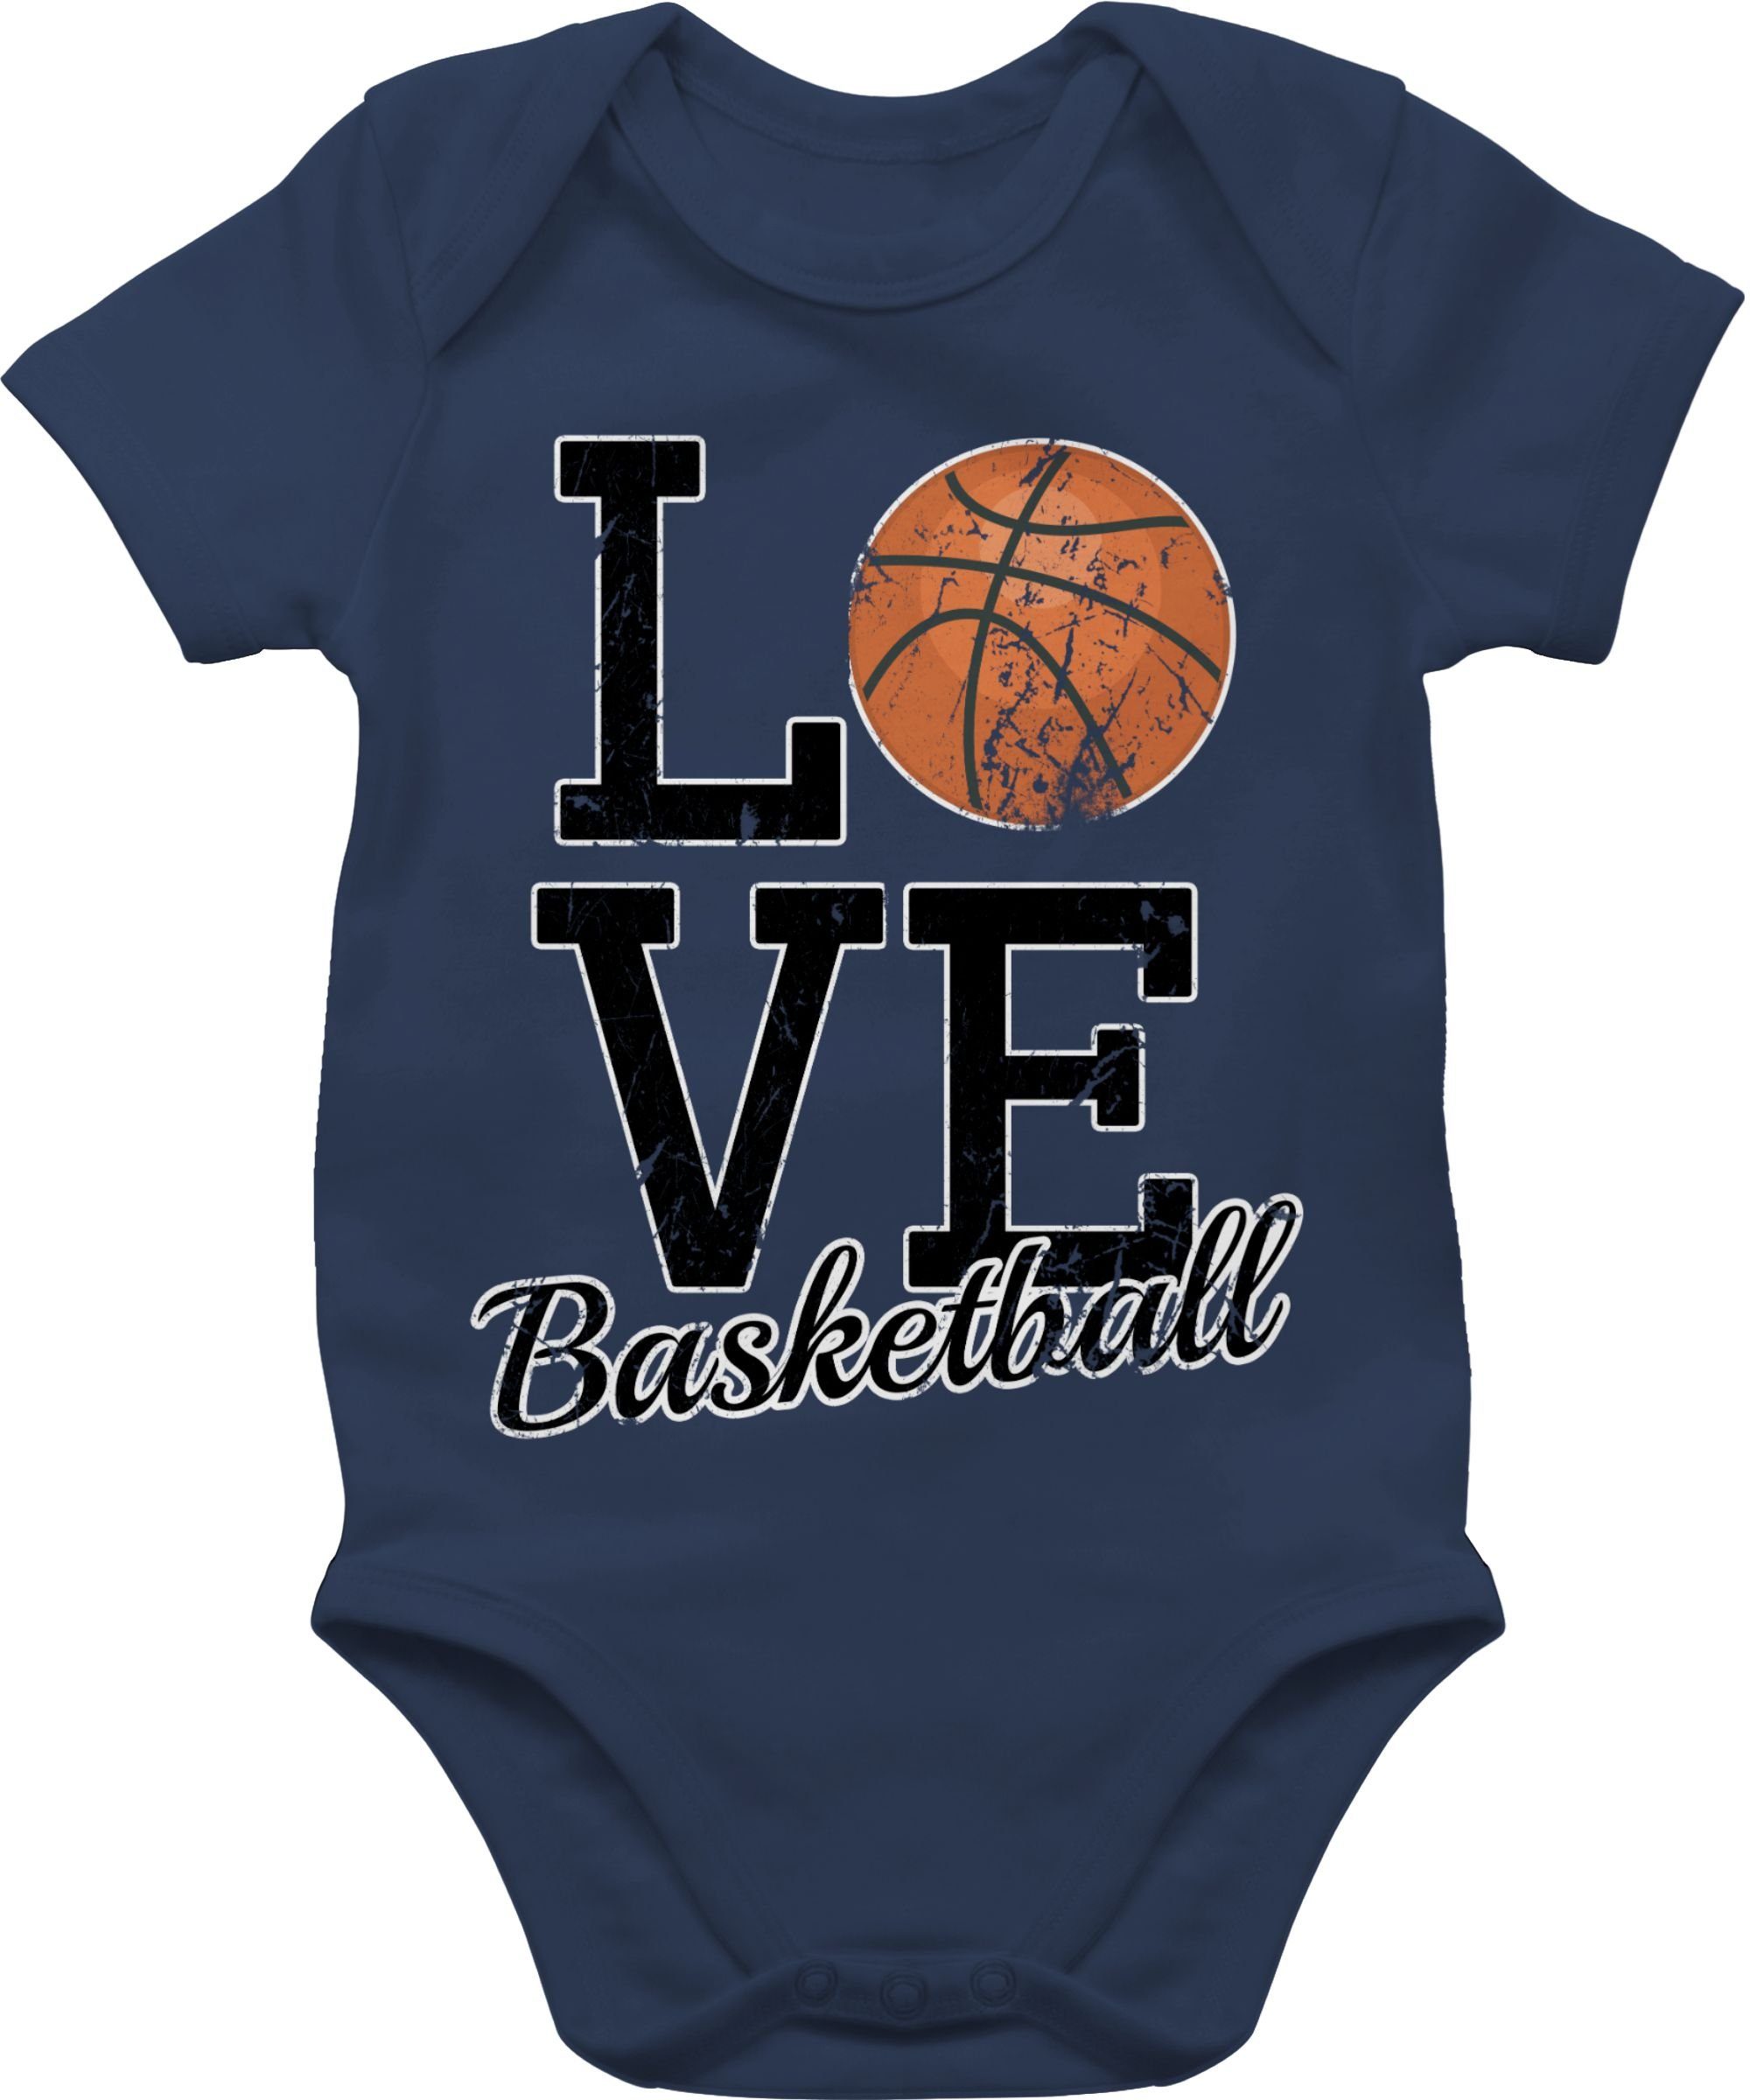 Shirtracer Shirtbody Love Basketball Sport & Bewegung Baby 3 Navy Blau